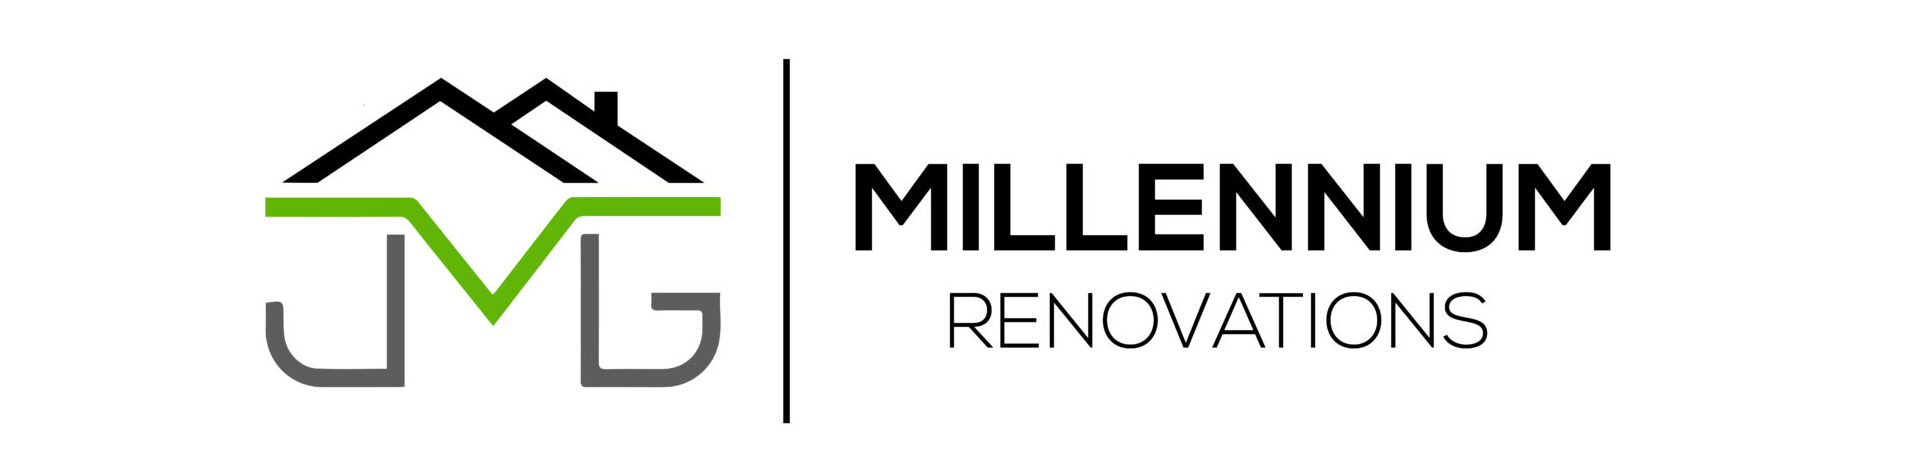 Millennium Renovations